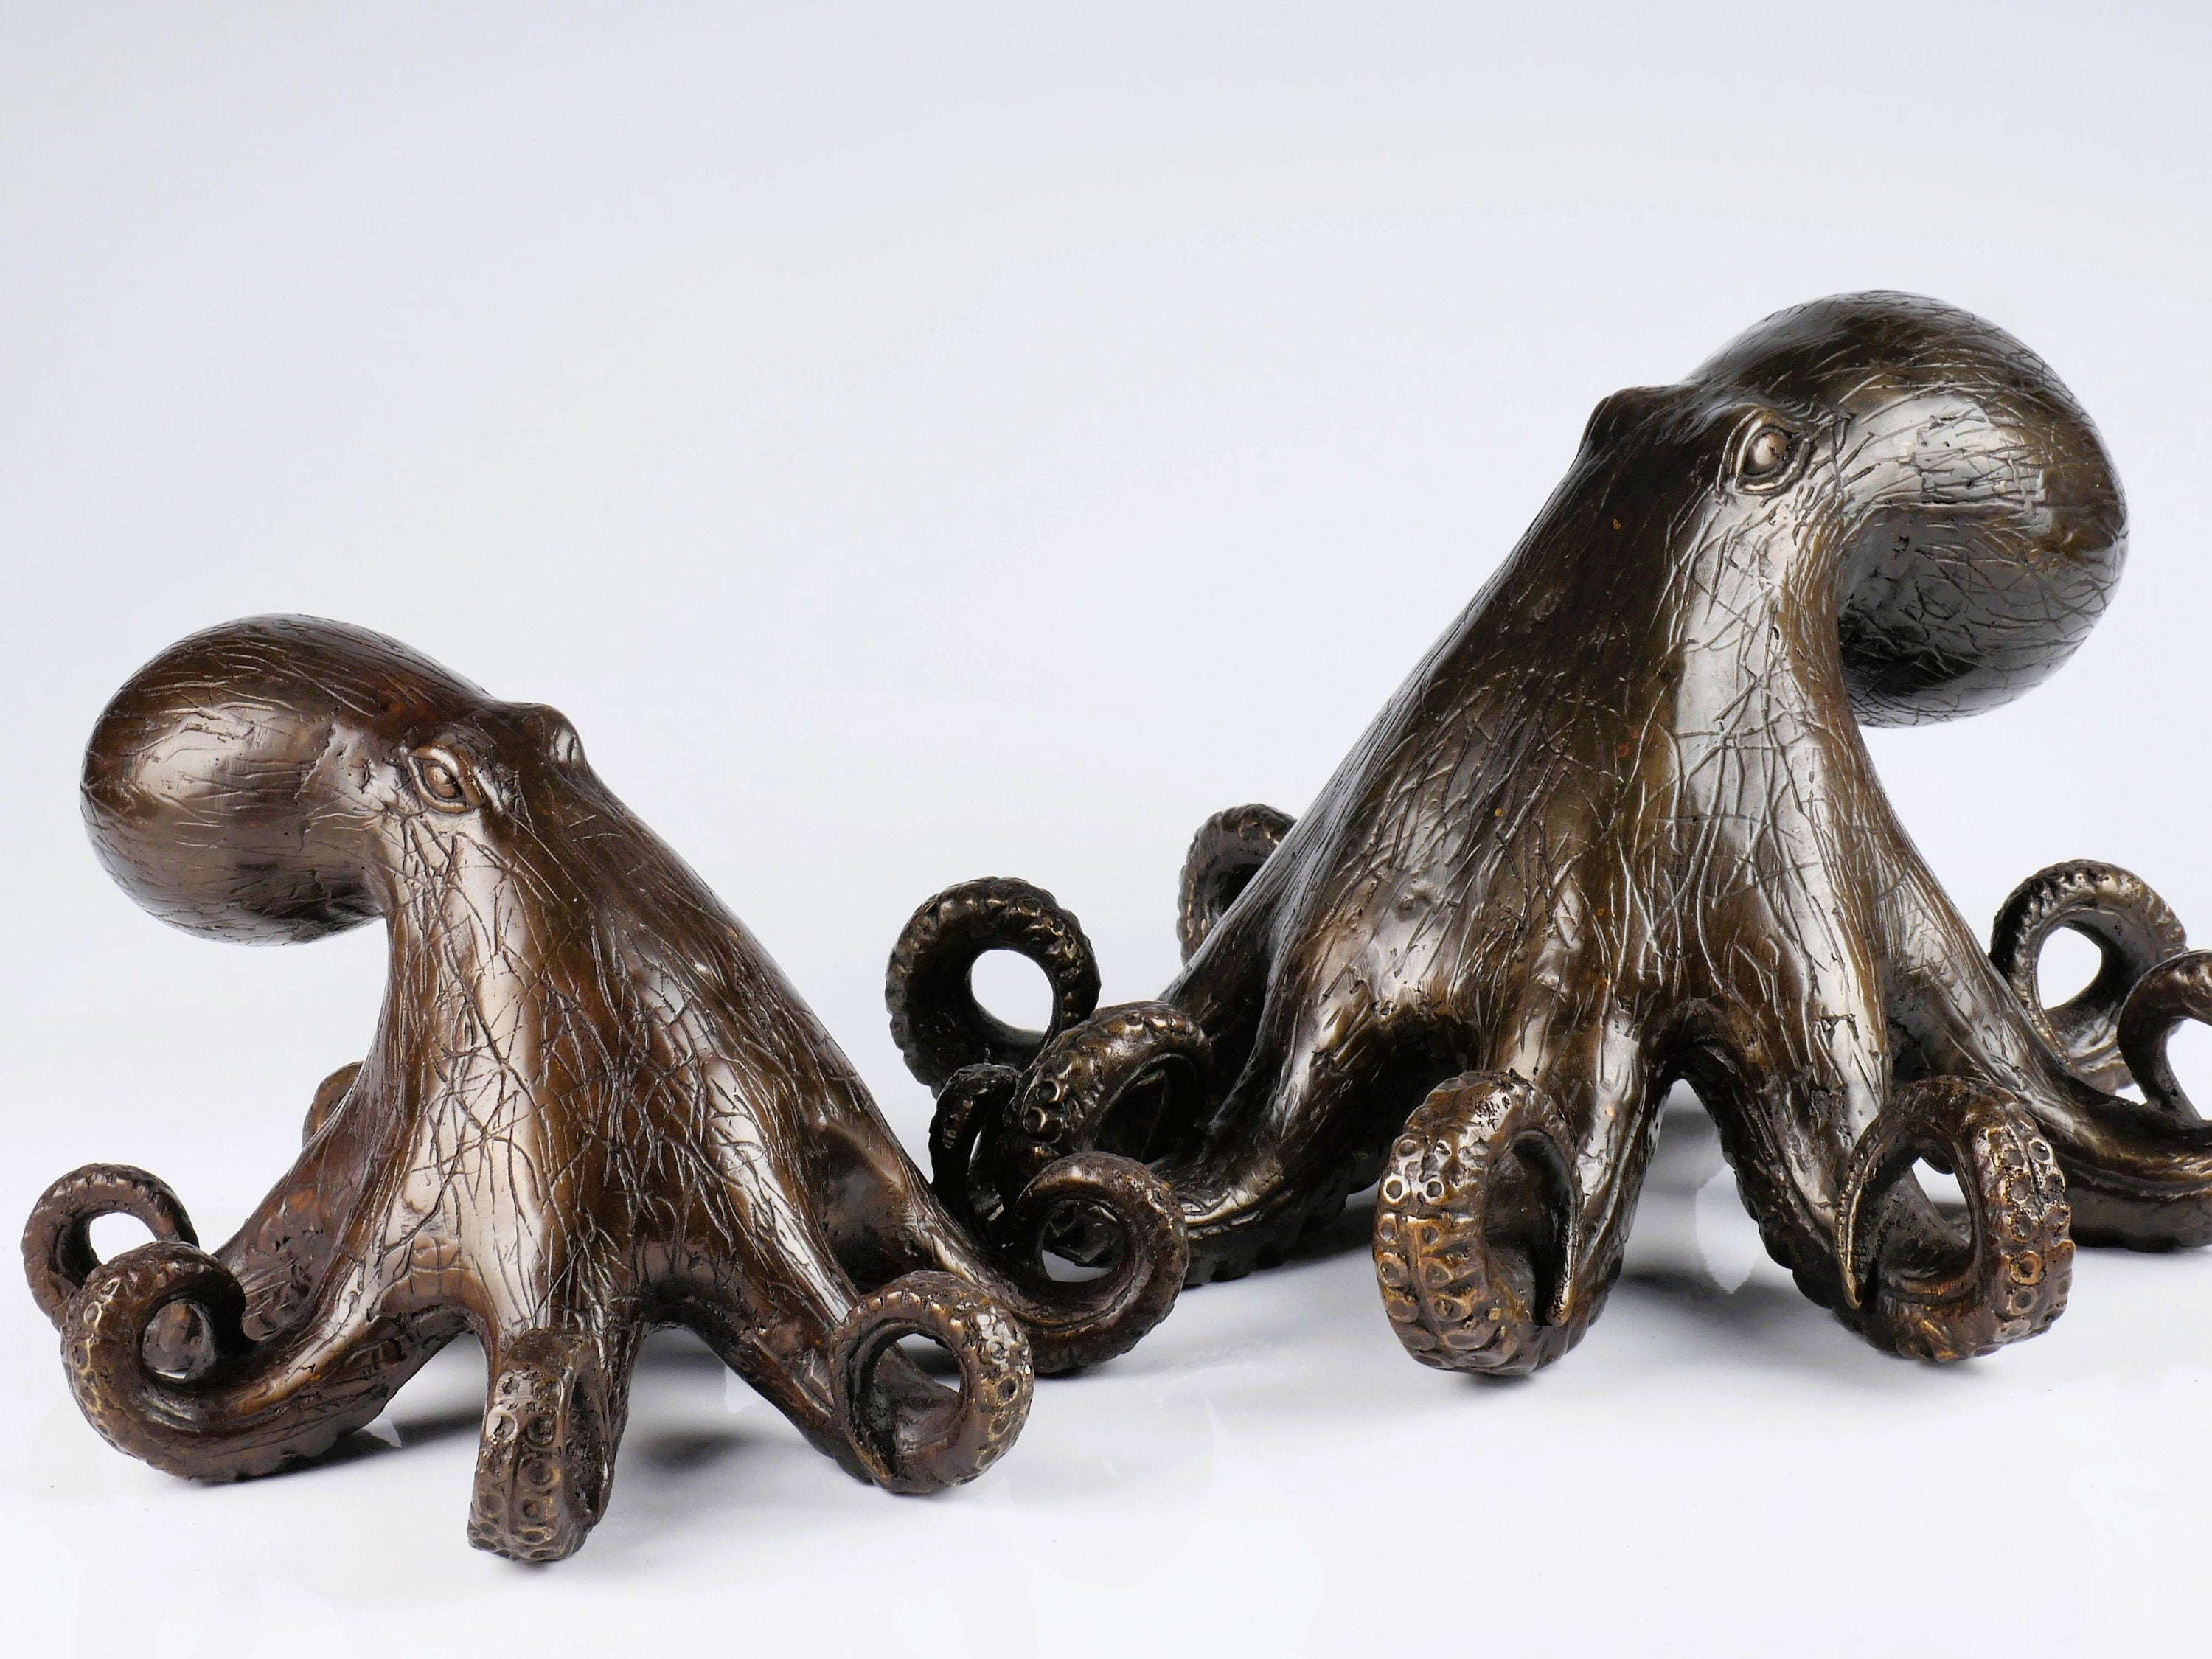 The Bronze Octopus - Handcasted Brass Octopus - Octopus Statue - Marine Art